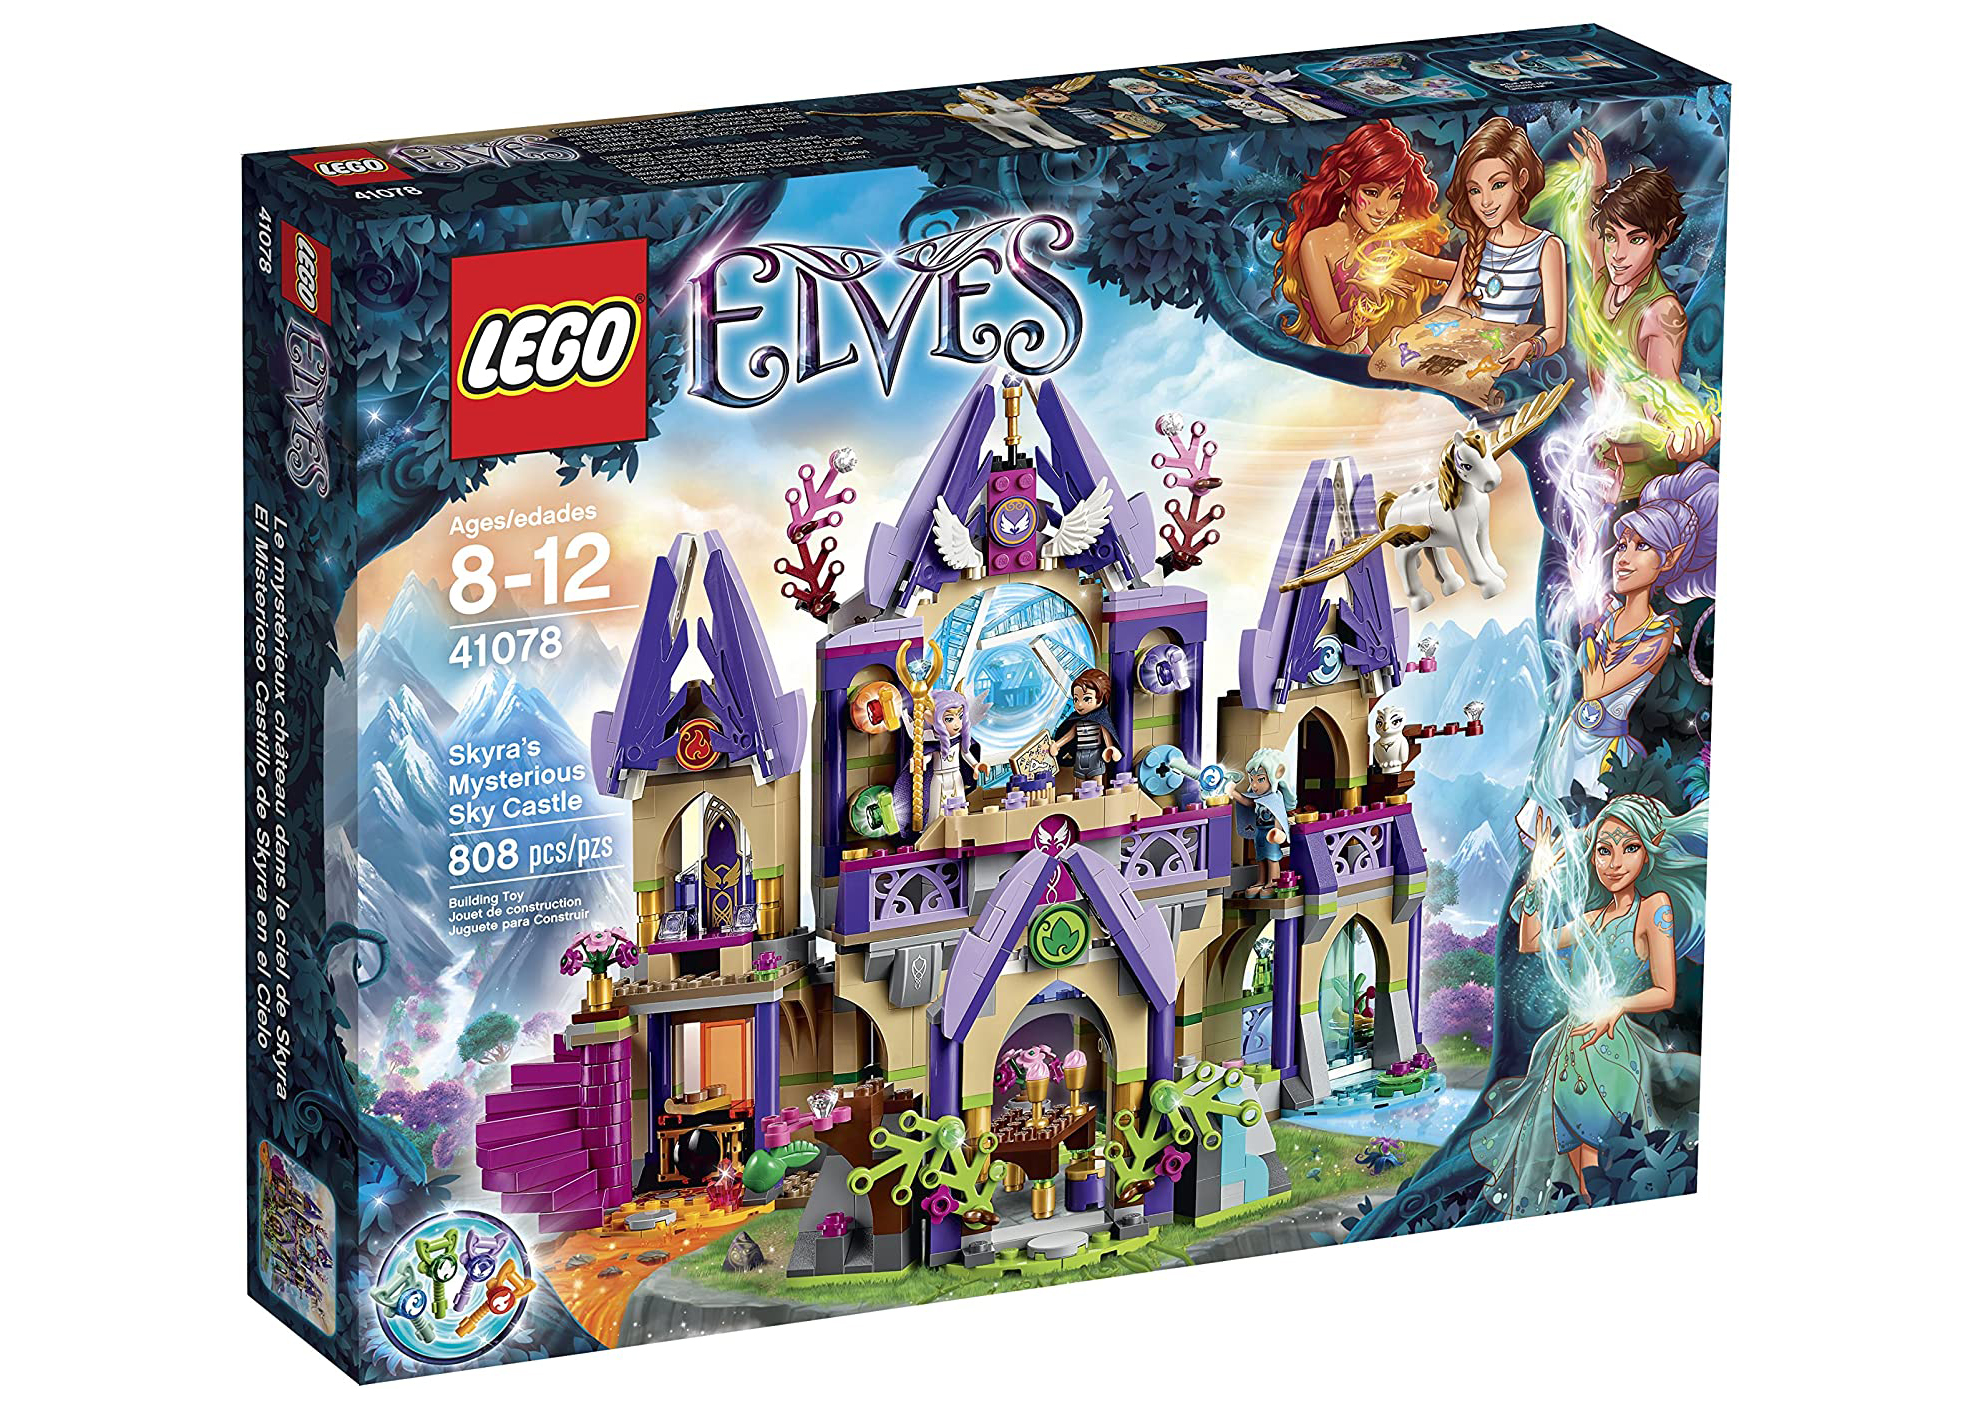 LEGO Elves Skyra's Mysterious Sky Castle Set 41078 - GB